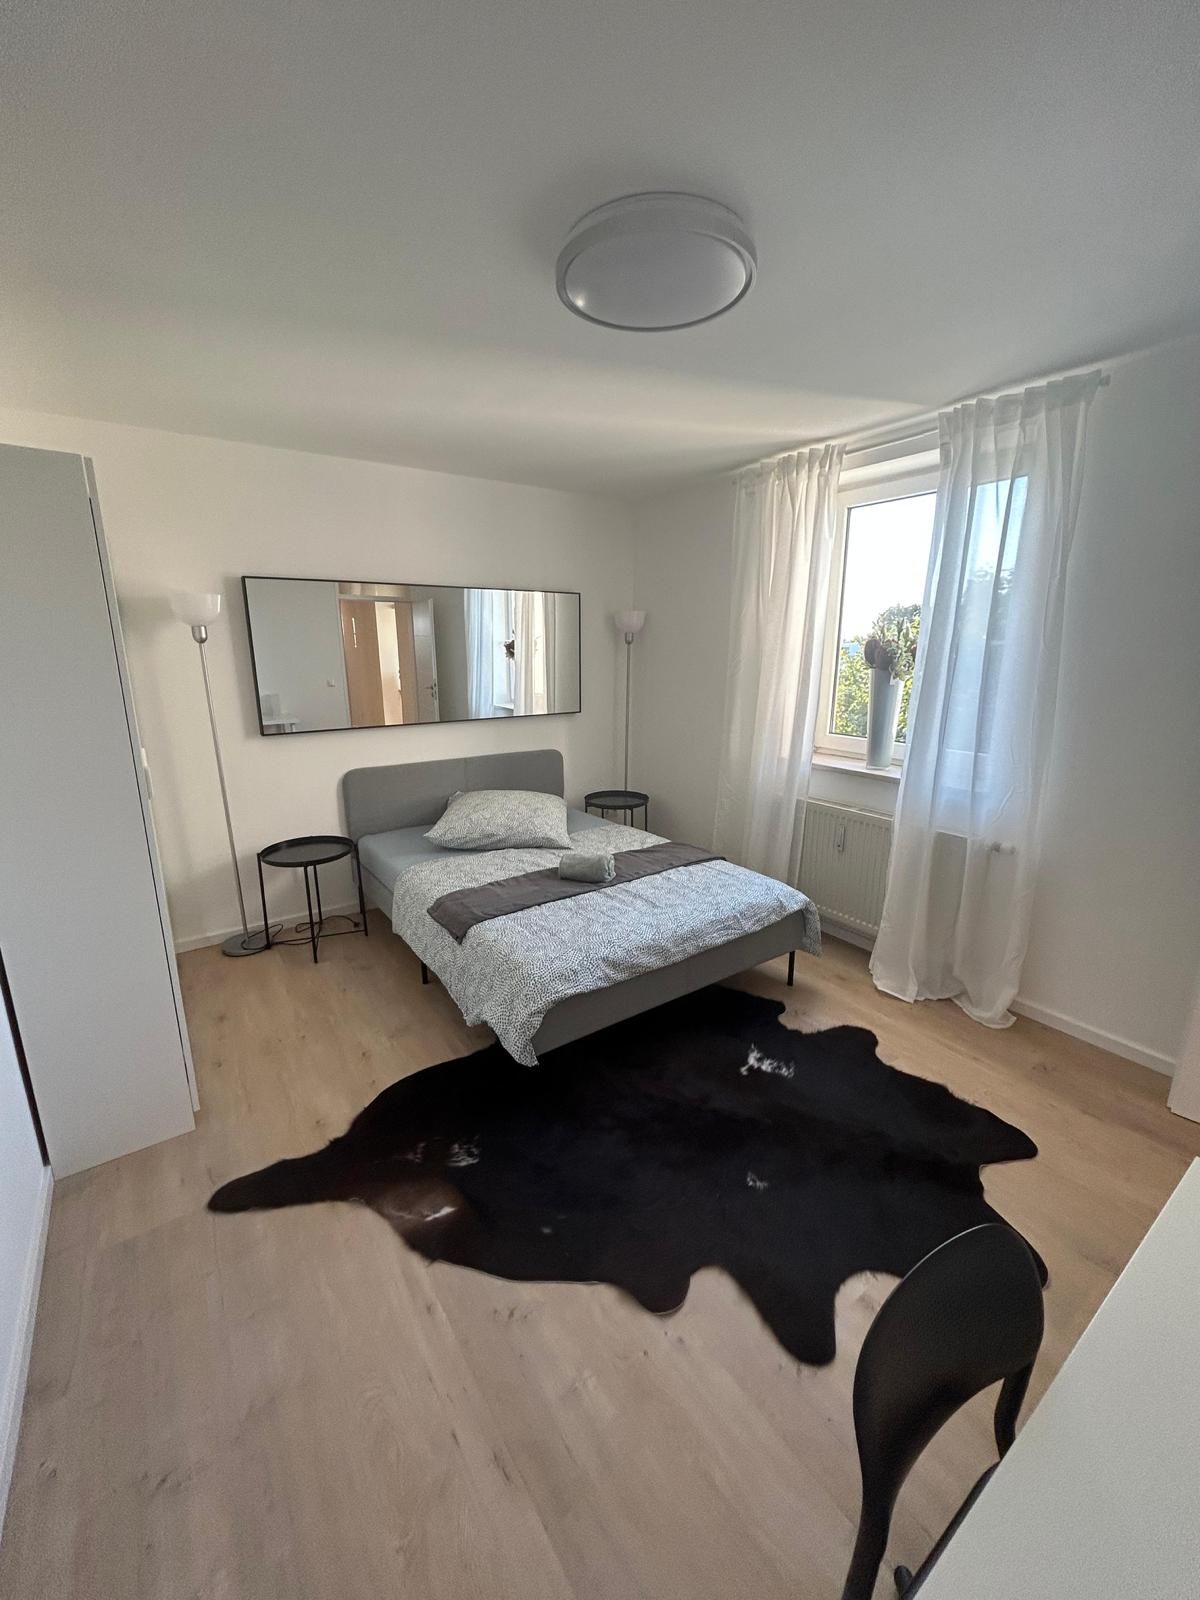 Great apartment in München